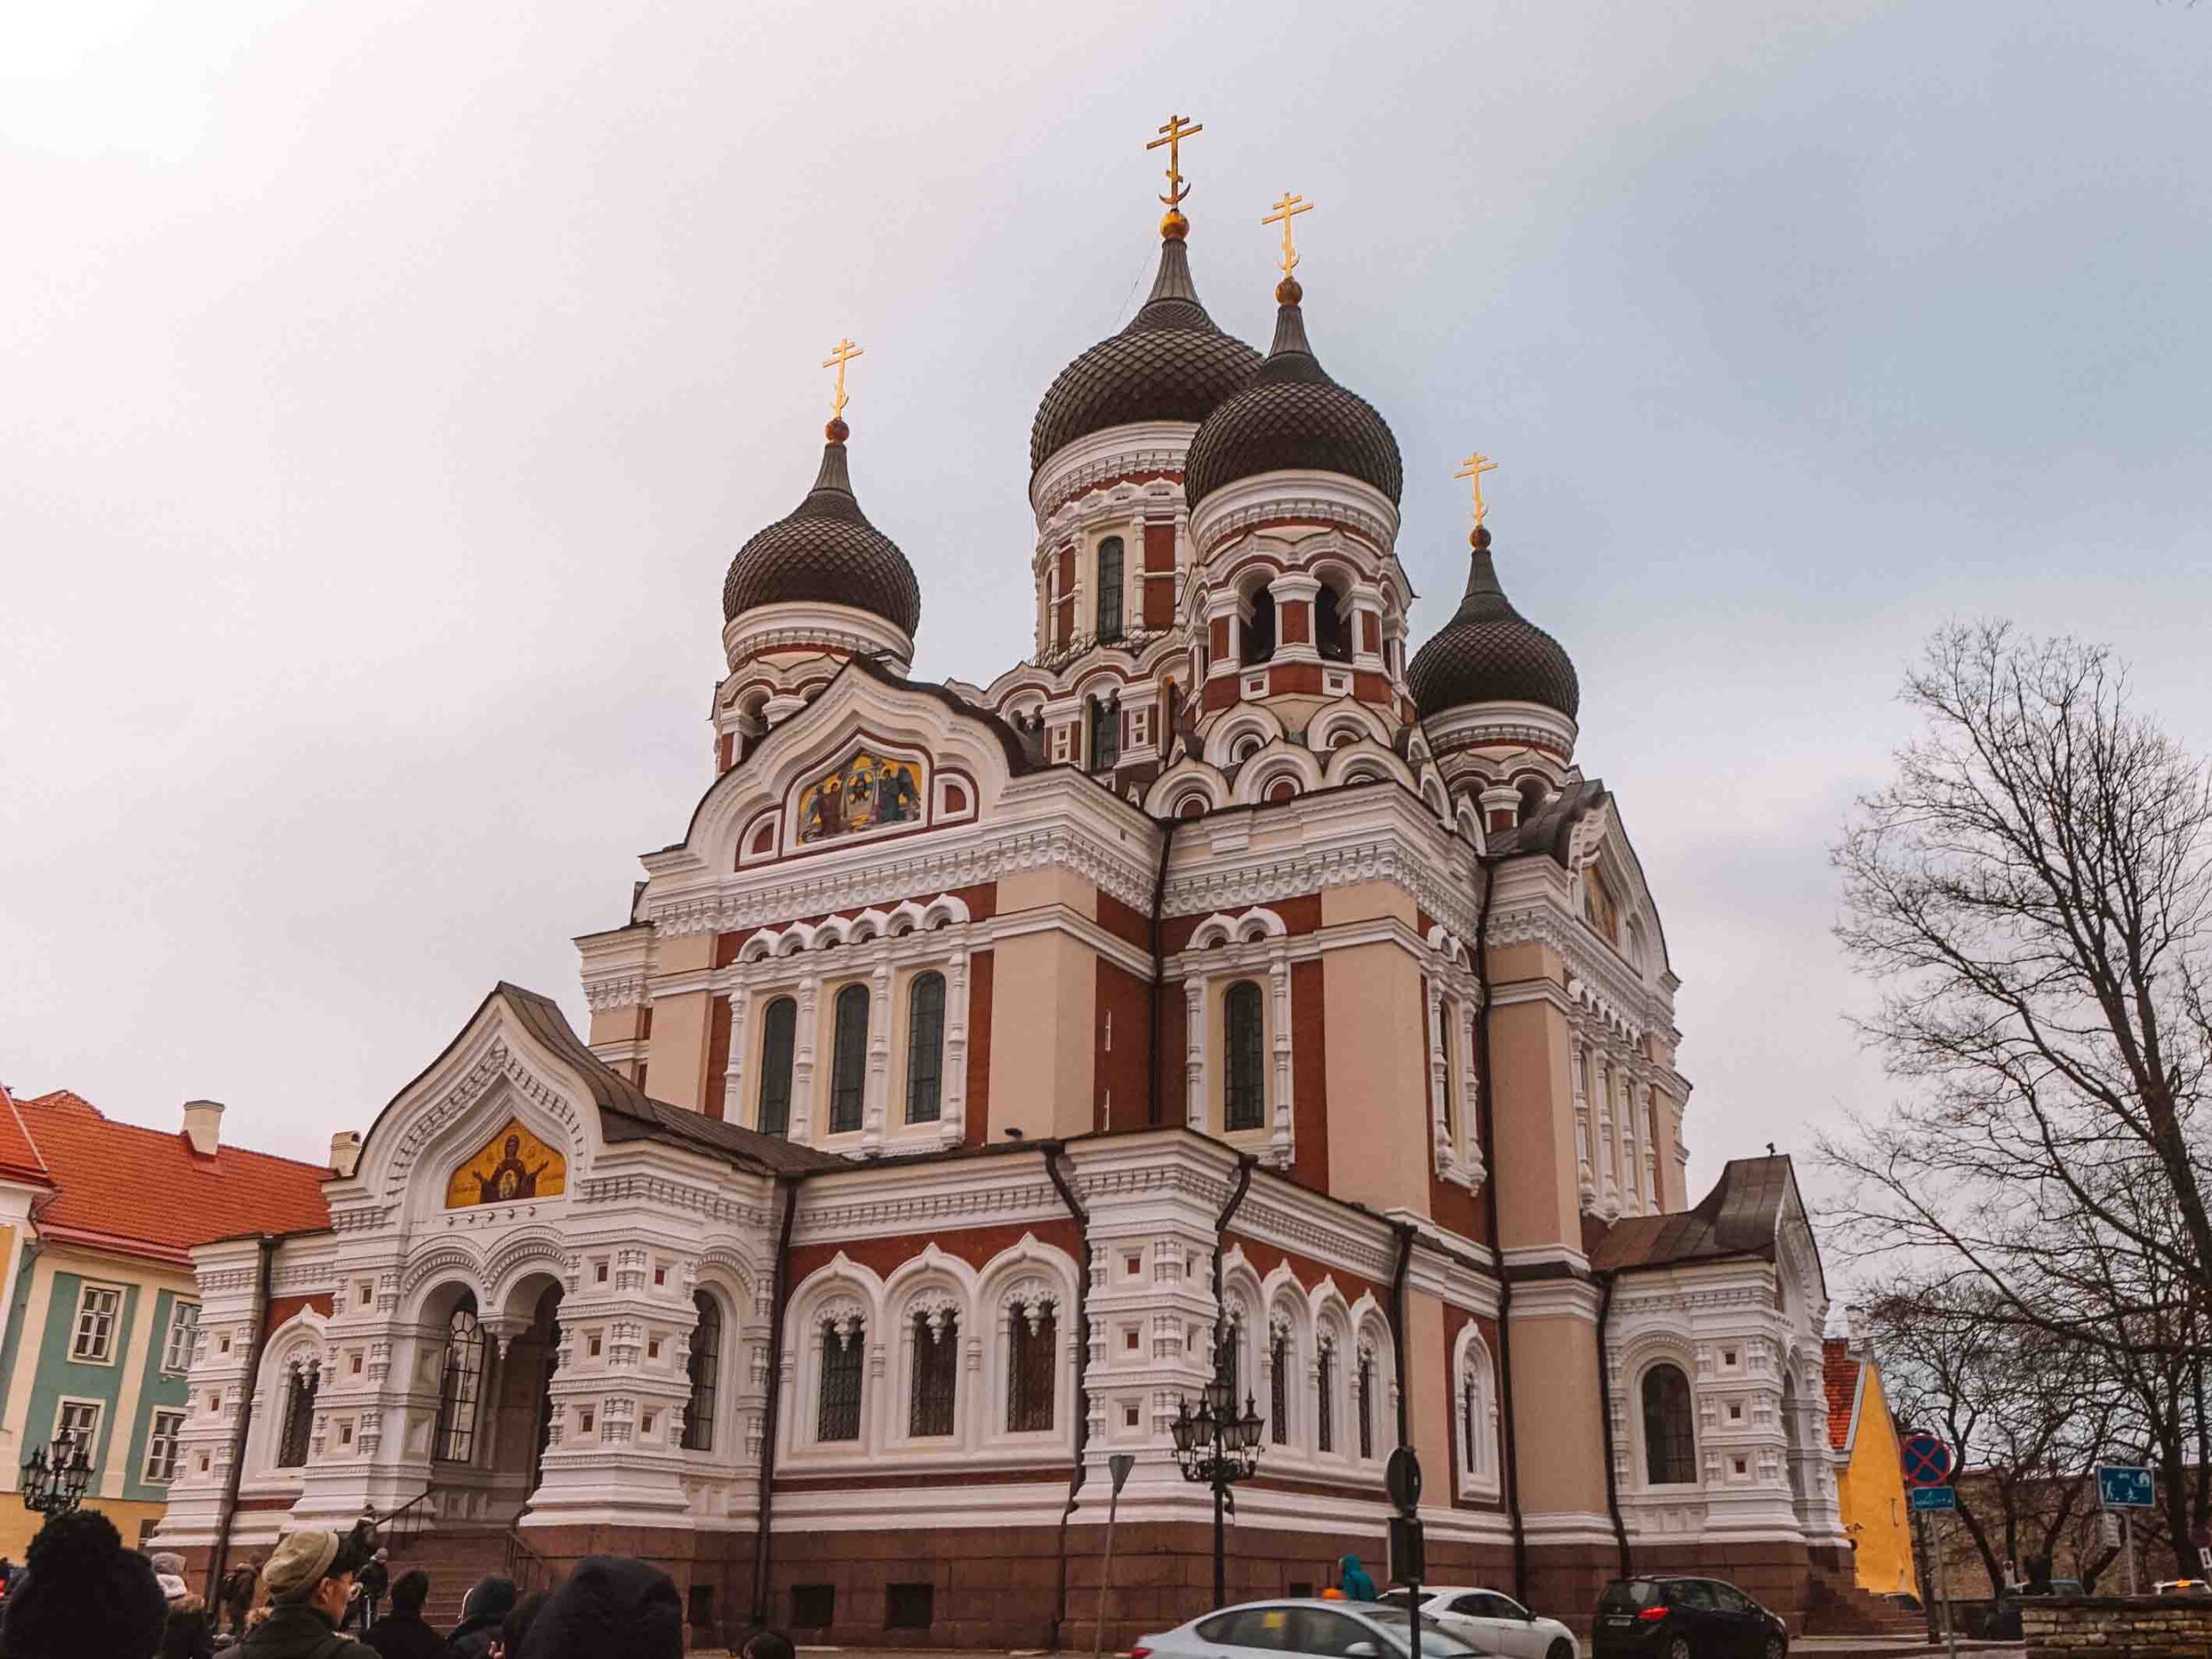 Russian orthadox church in Tallinn's old town